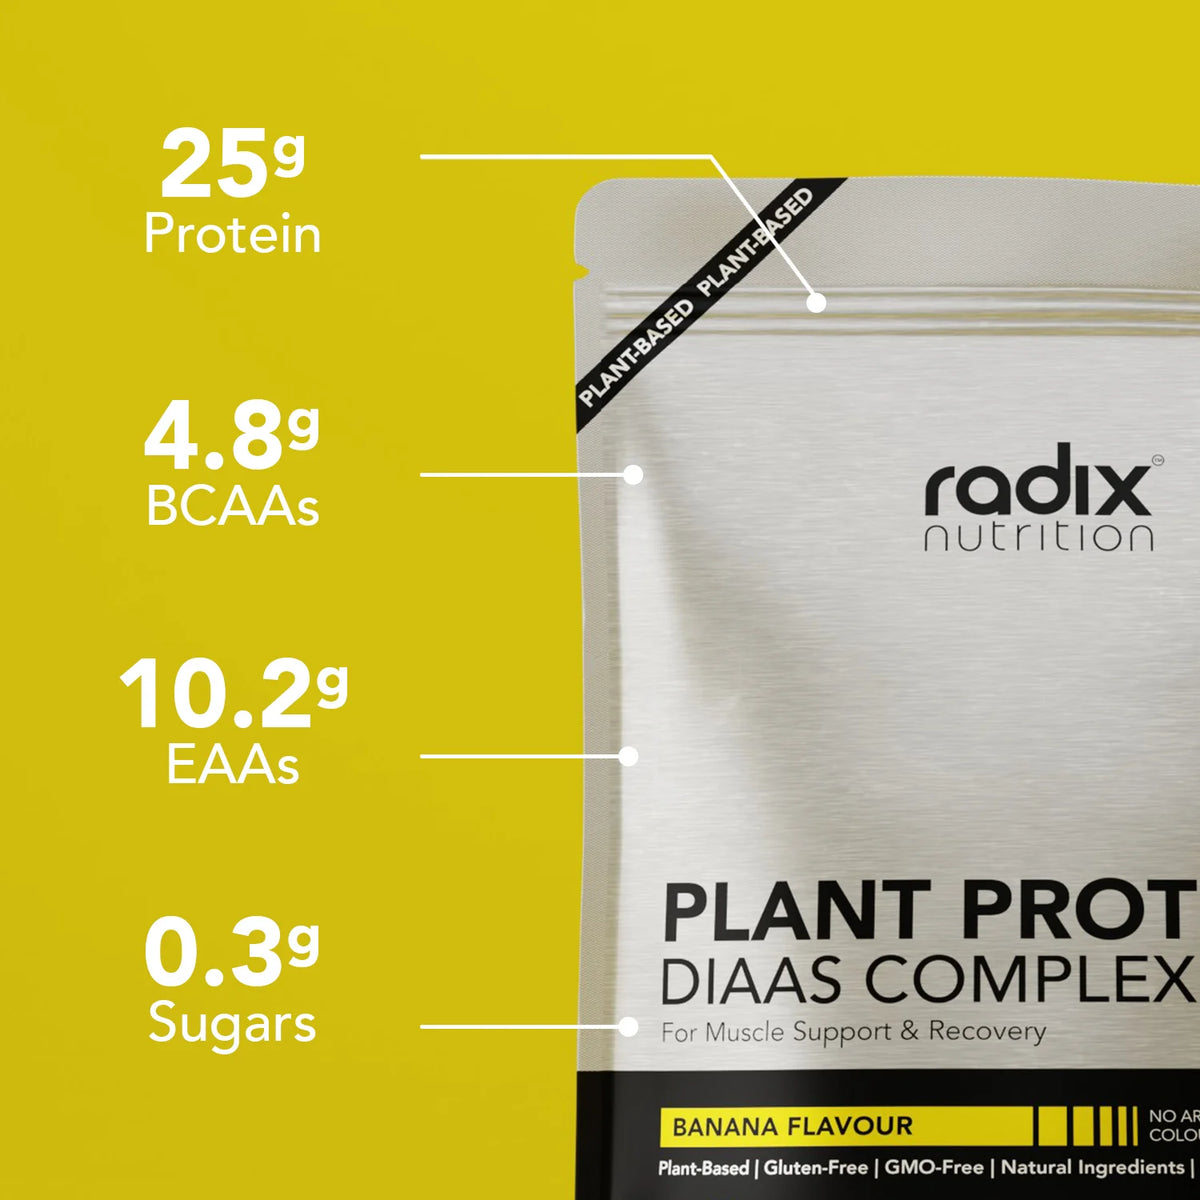 Plant Protein DIAAS Complex 1.30 - Banana / 1kg Bag